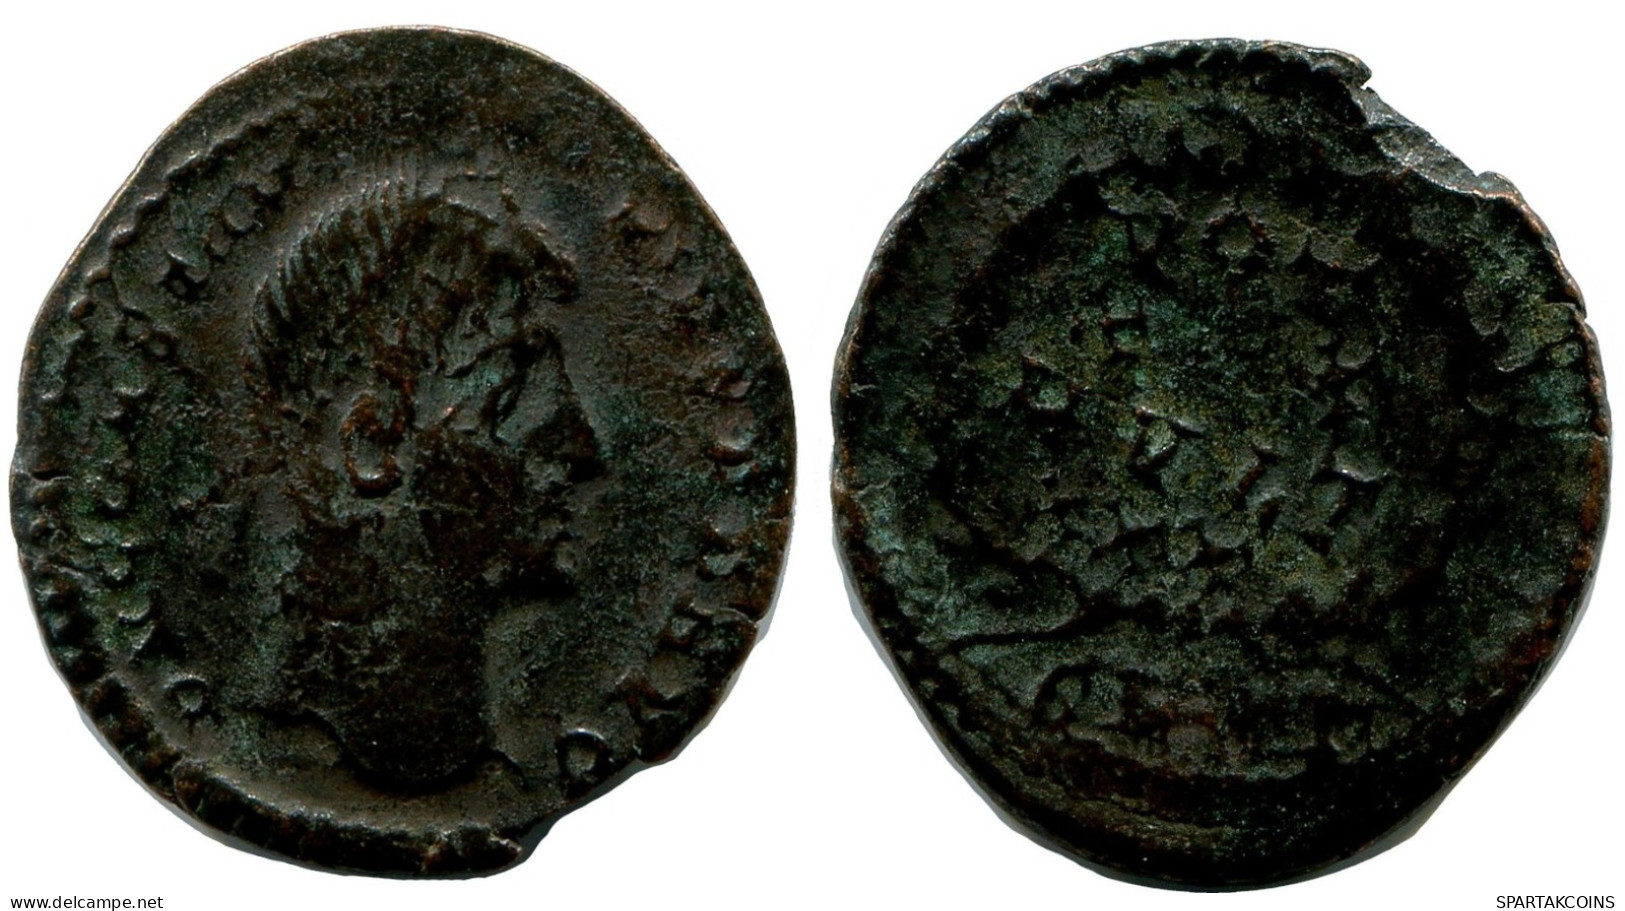 CONSTANTIUS II ALEKSANDRIA FROM THE ROYAL ONTARIO MUSEUM #ANC10229.14.F.A - El Imperio Christiano (307 / 363)